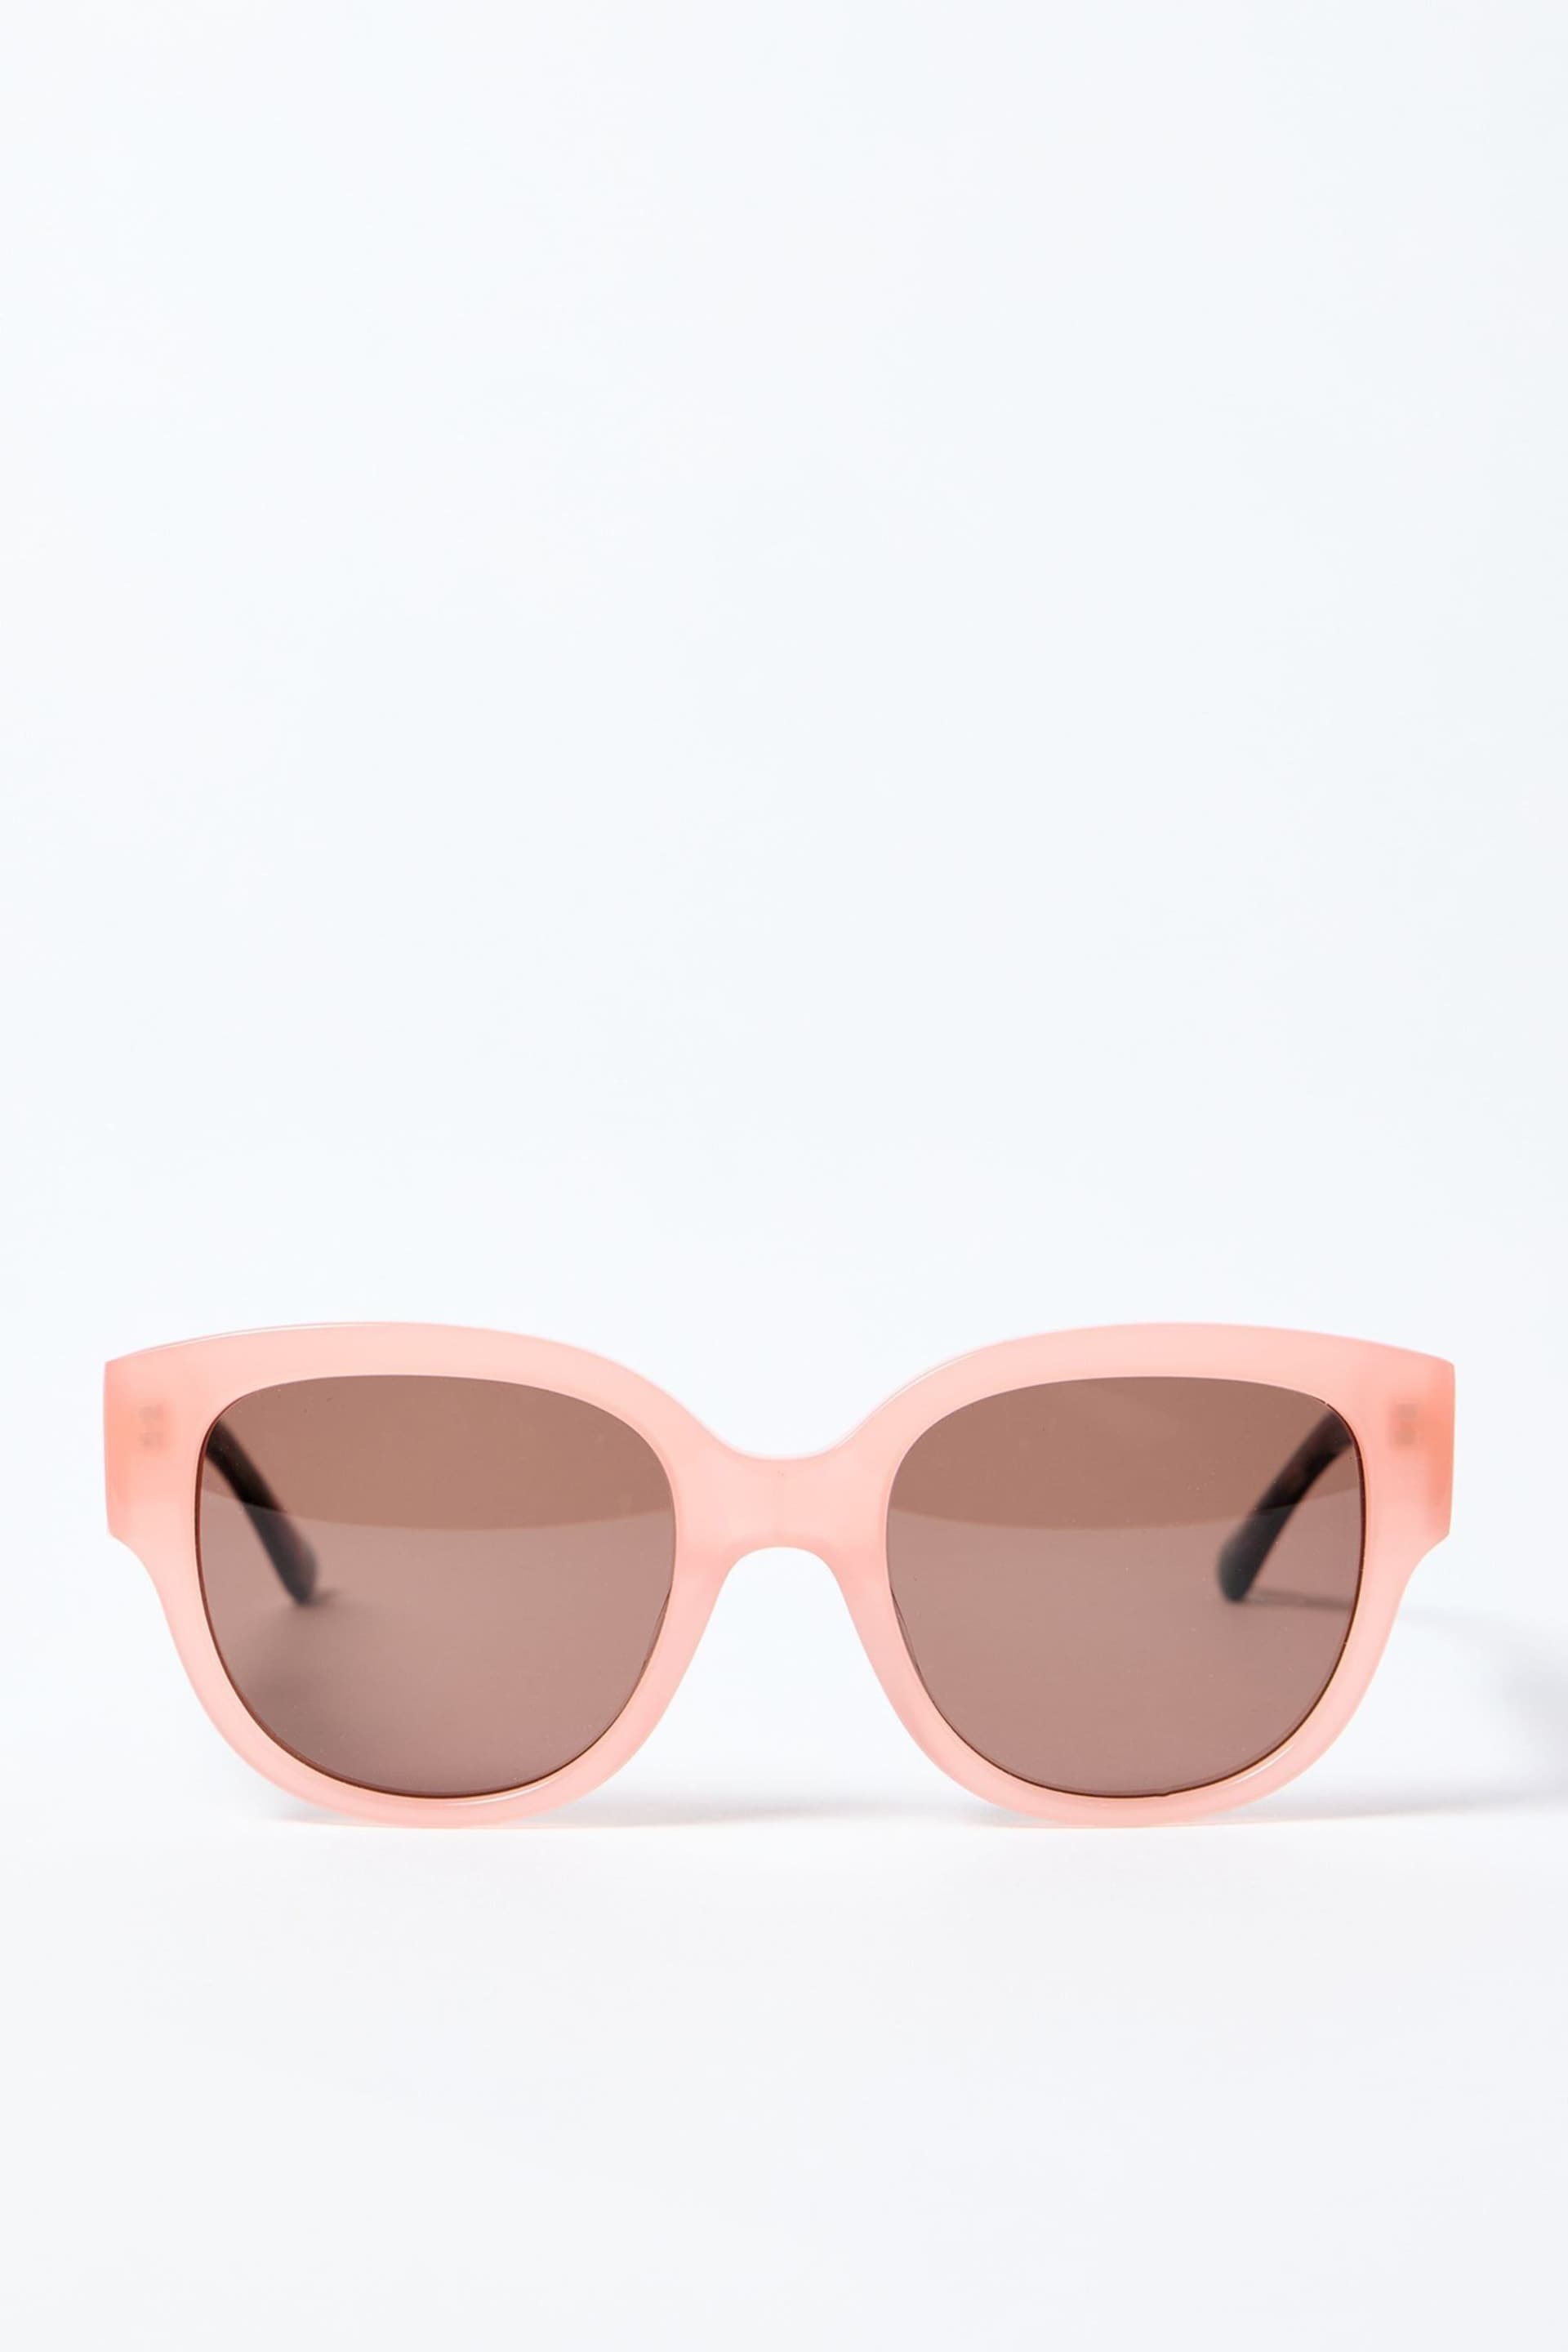 Oliver Bonas Pink Faux Fur Marbled Pink Acetate Sunglasses - Image 3 of 6